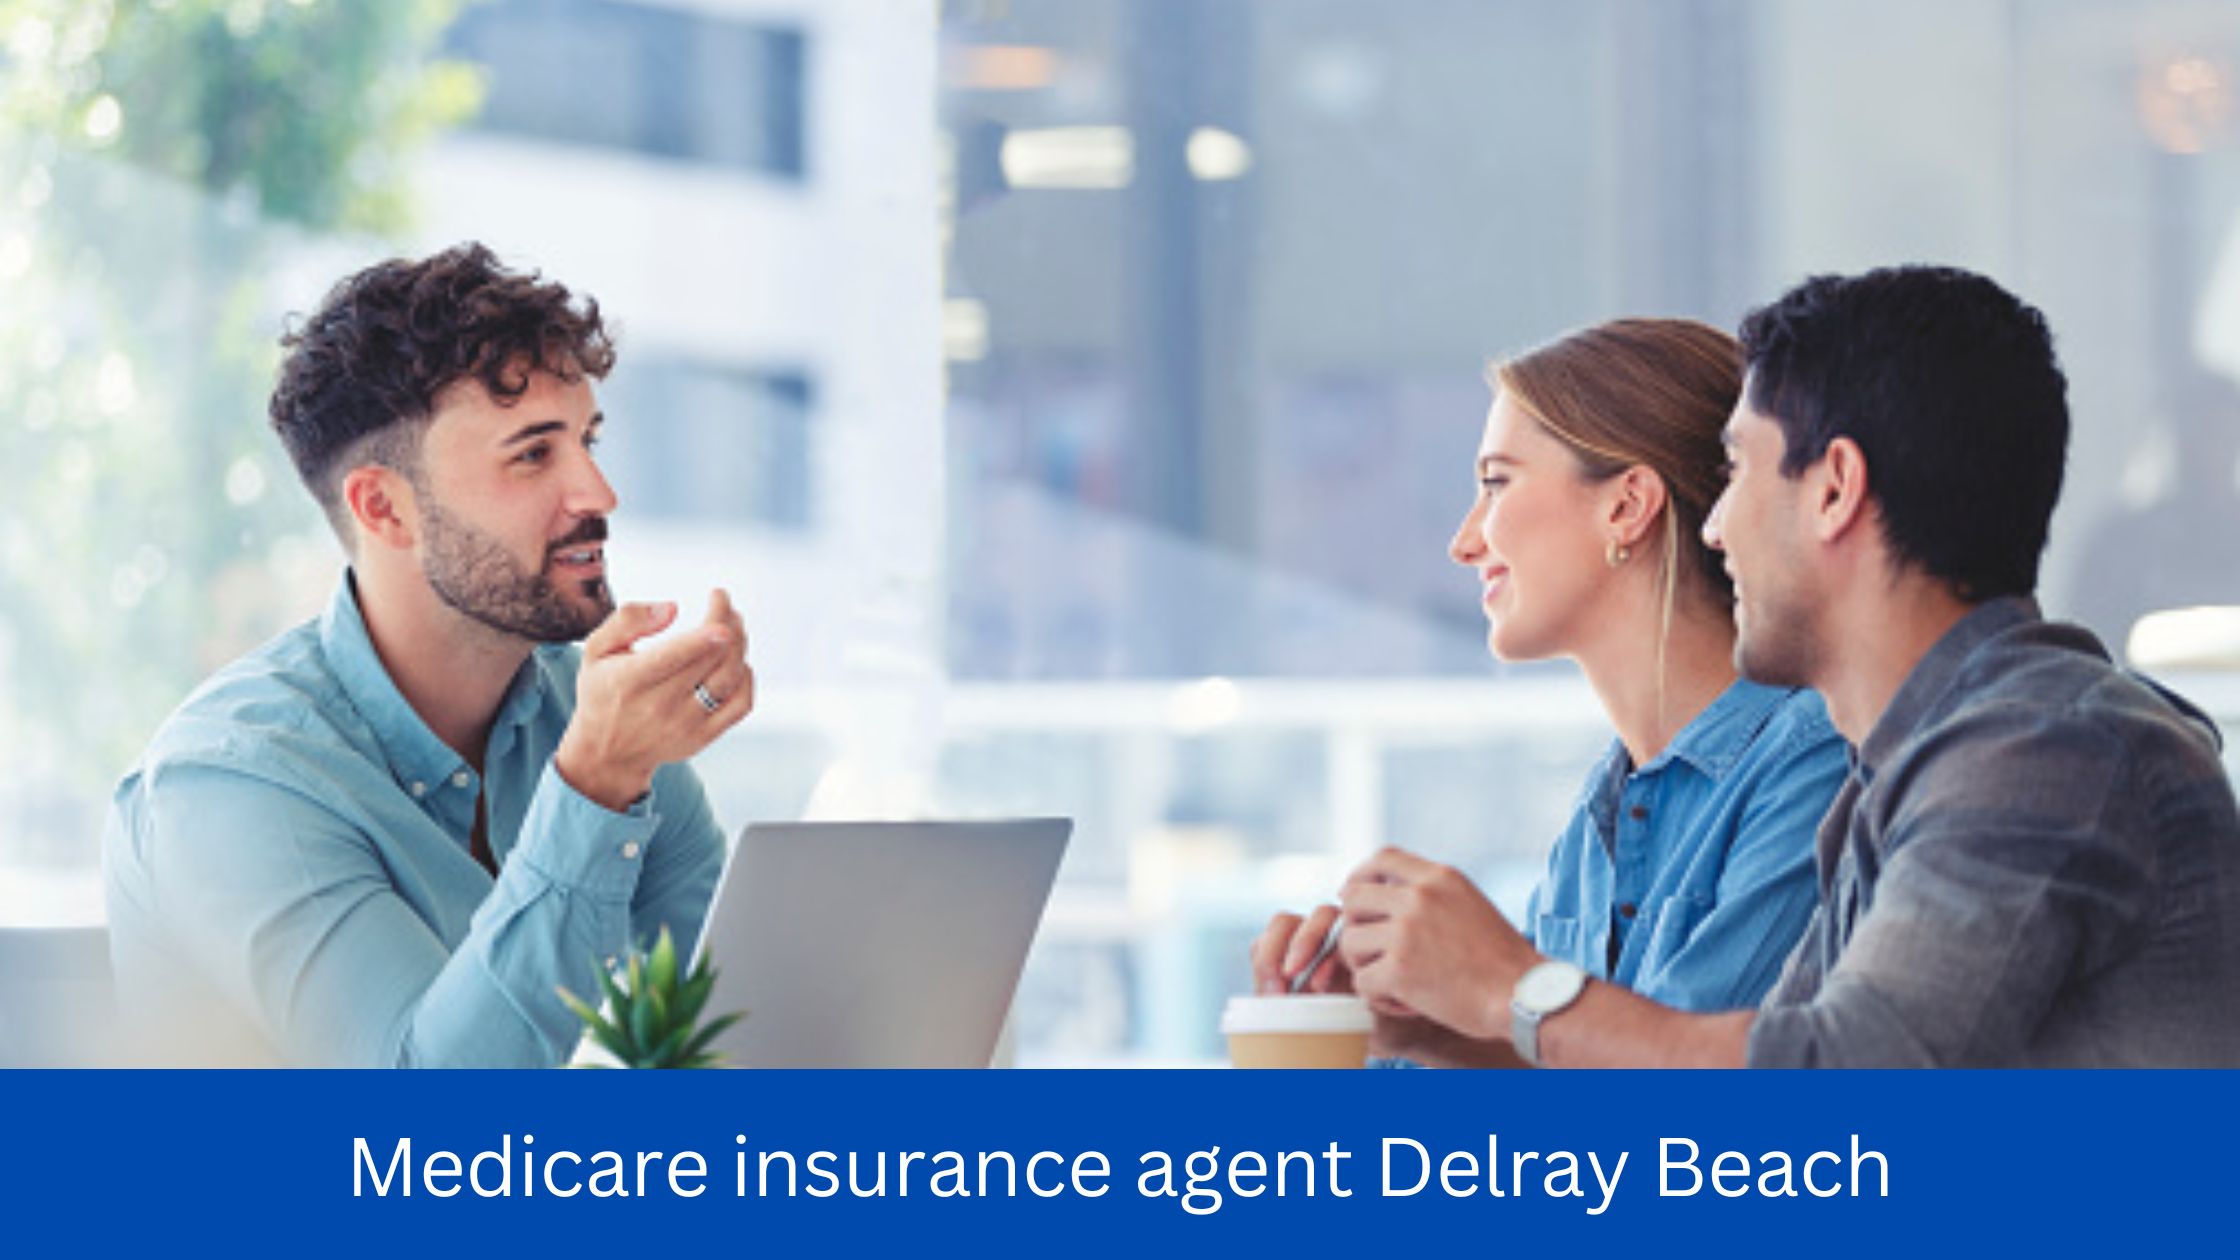 Medicare insurance agent Delray Beach-149e7aa1